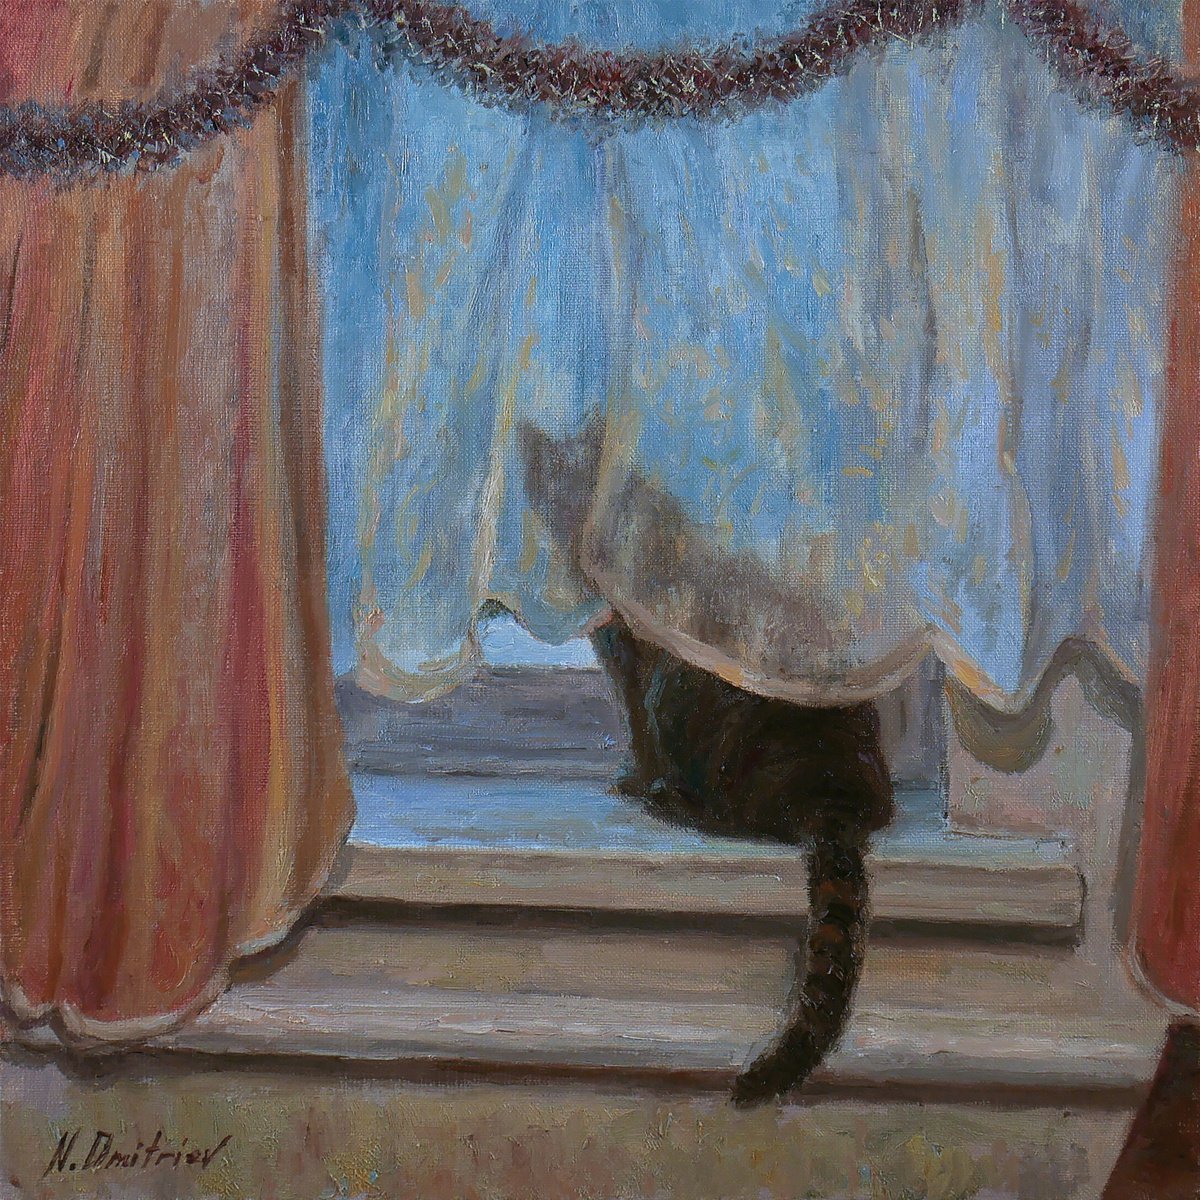 Cat Waiting For Christmas - original oil painting by Nikolay Dmitriev